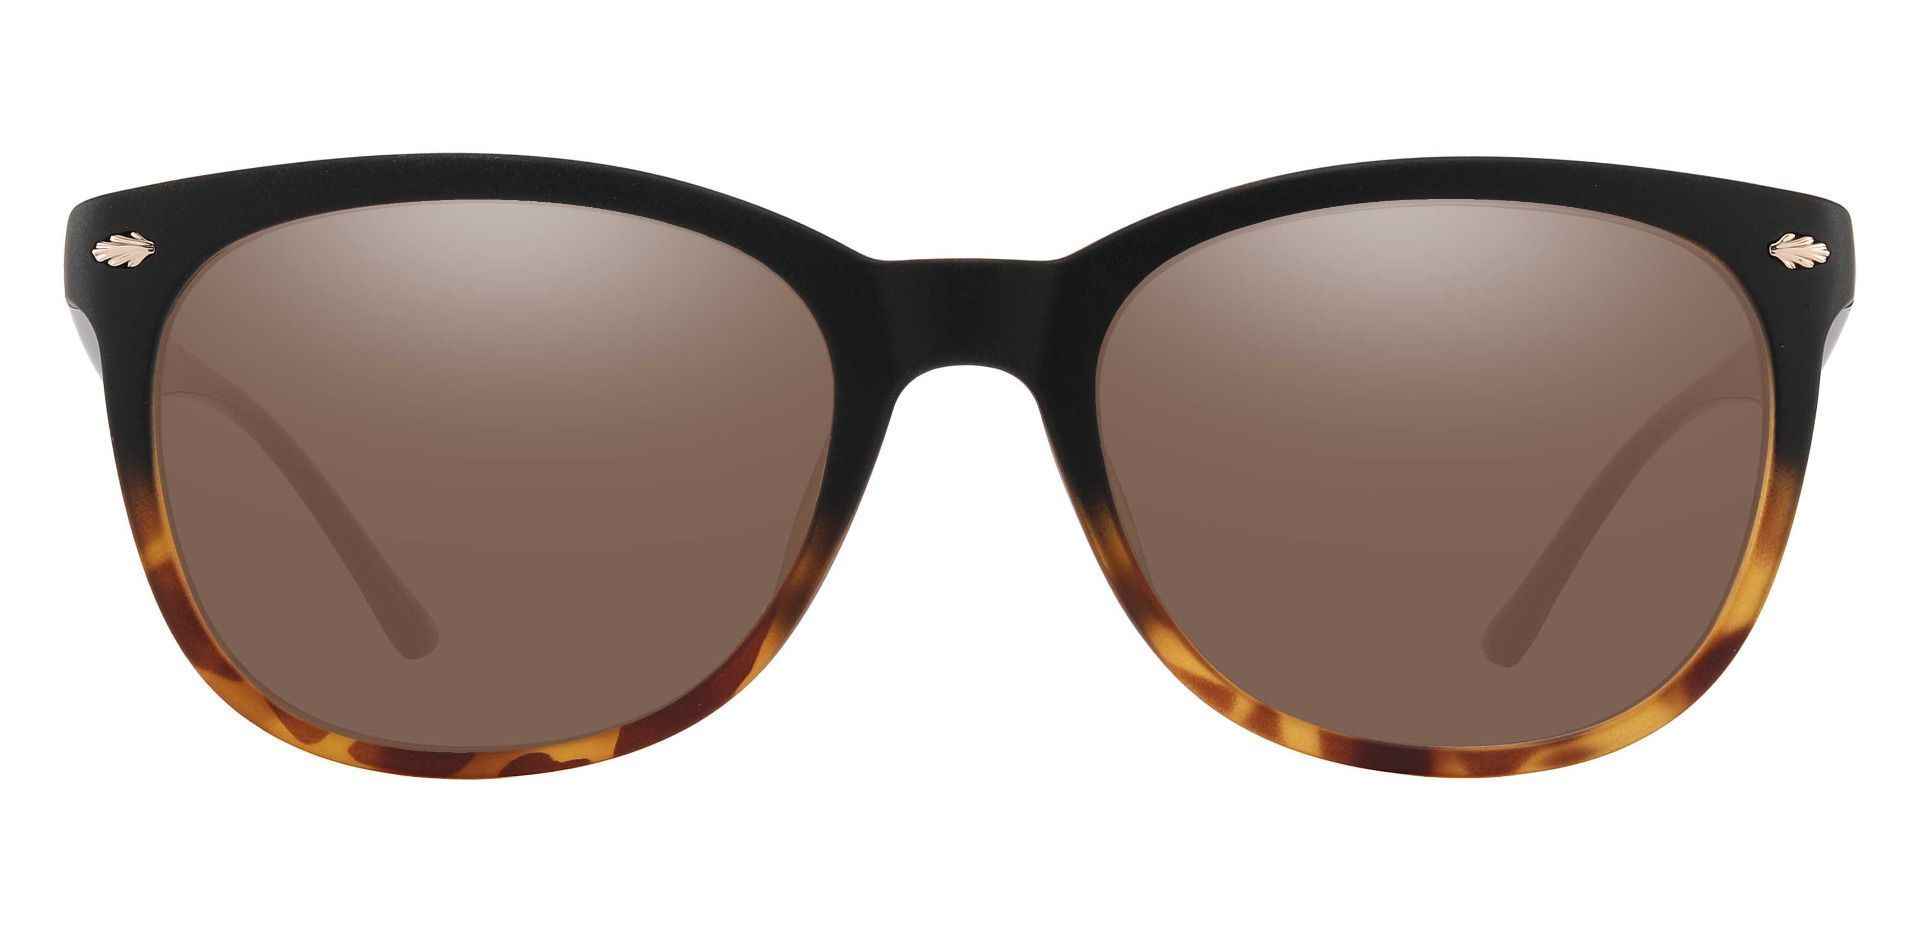 Pavilion Square Reading Sunglasses - Black Frame With Brown Lenses